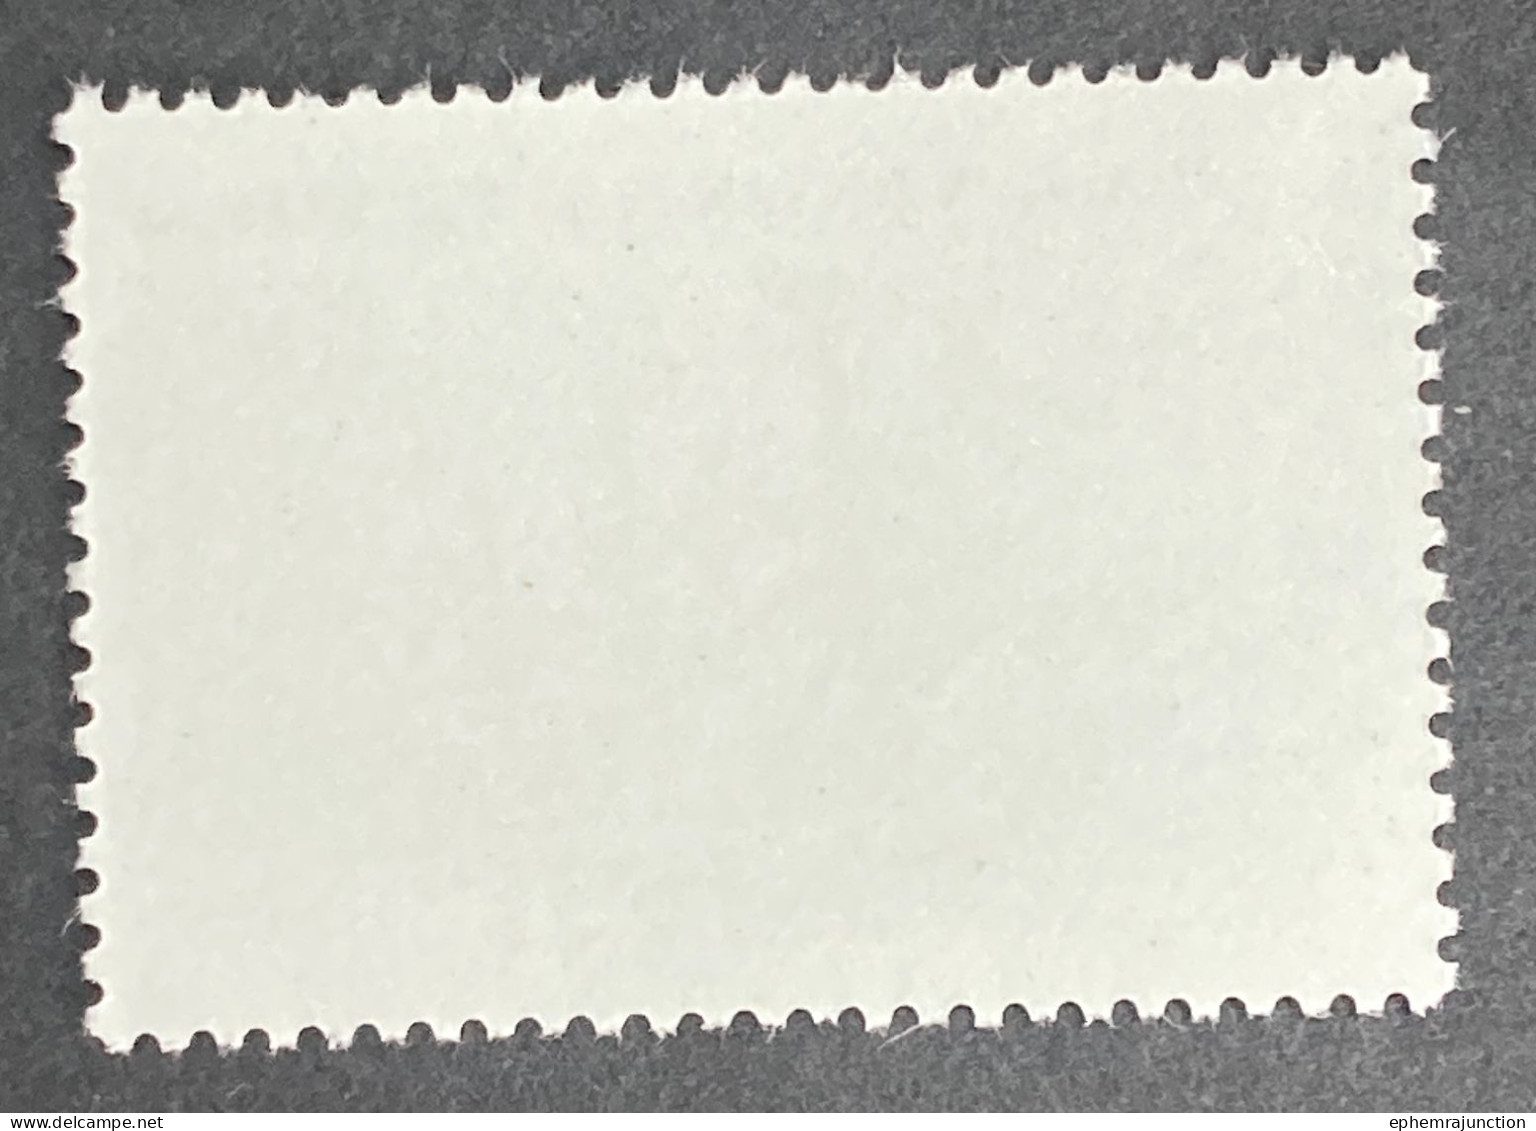 Nimrod 15c Australia Stamp 1980 Sg Aq 41 MNH - Mint Stamps